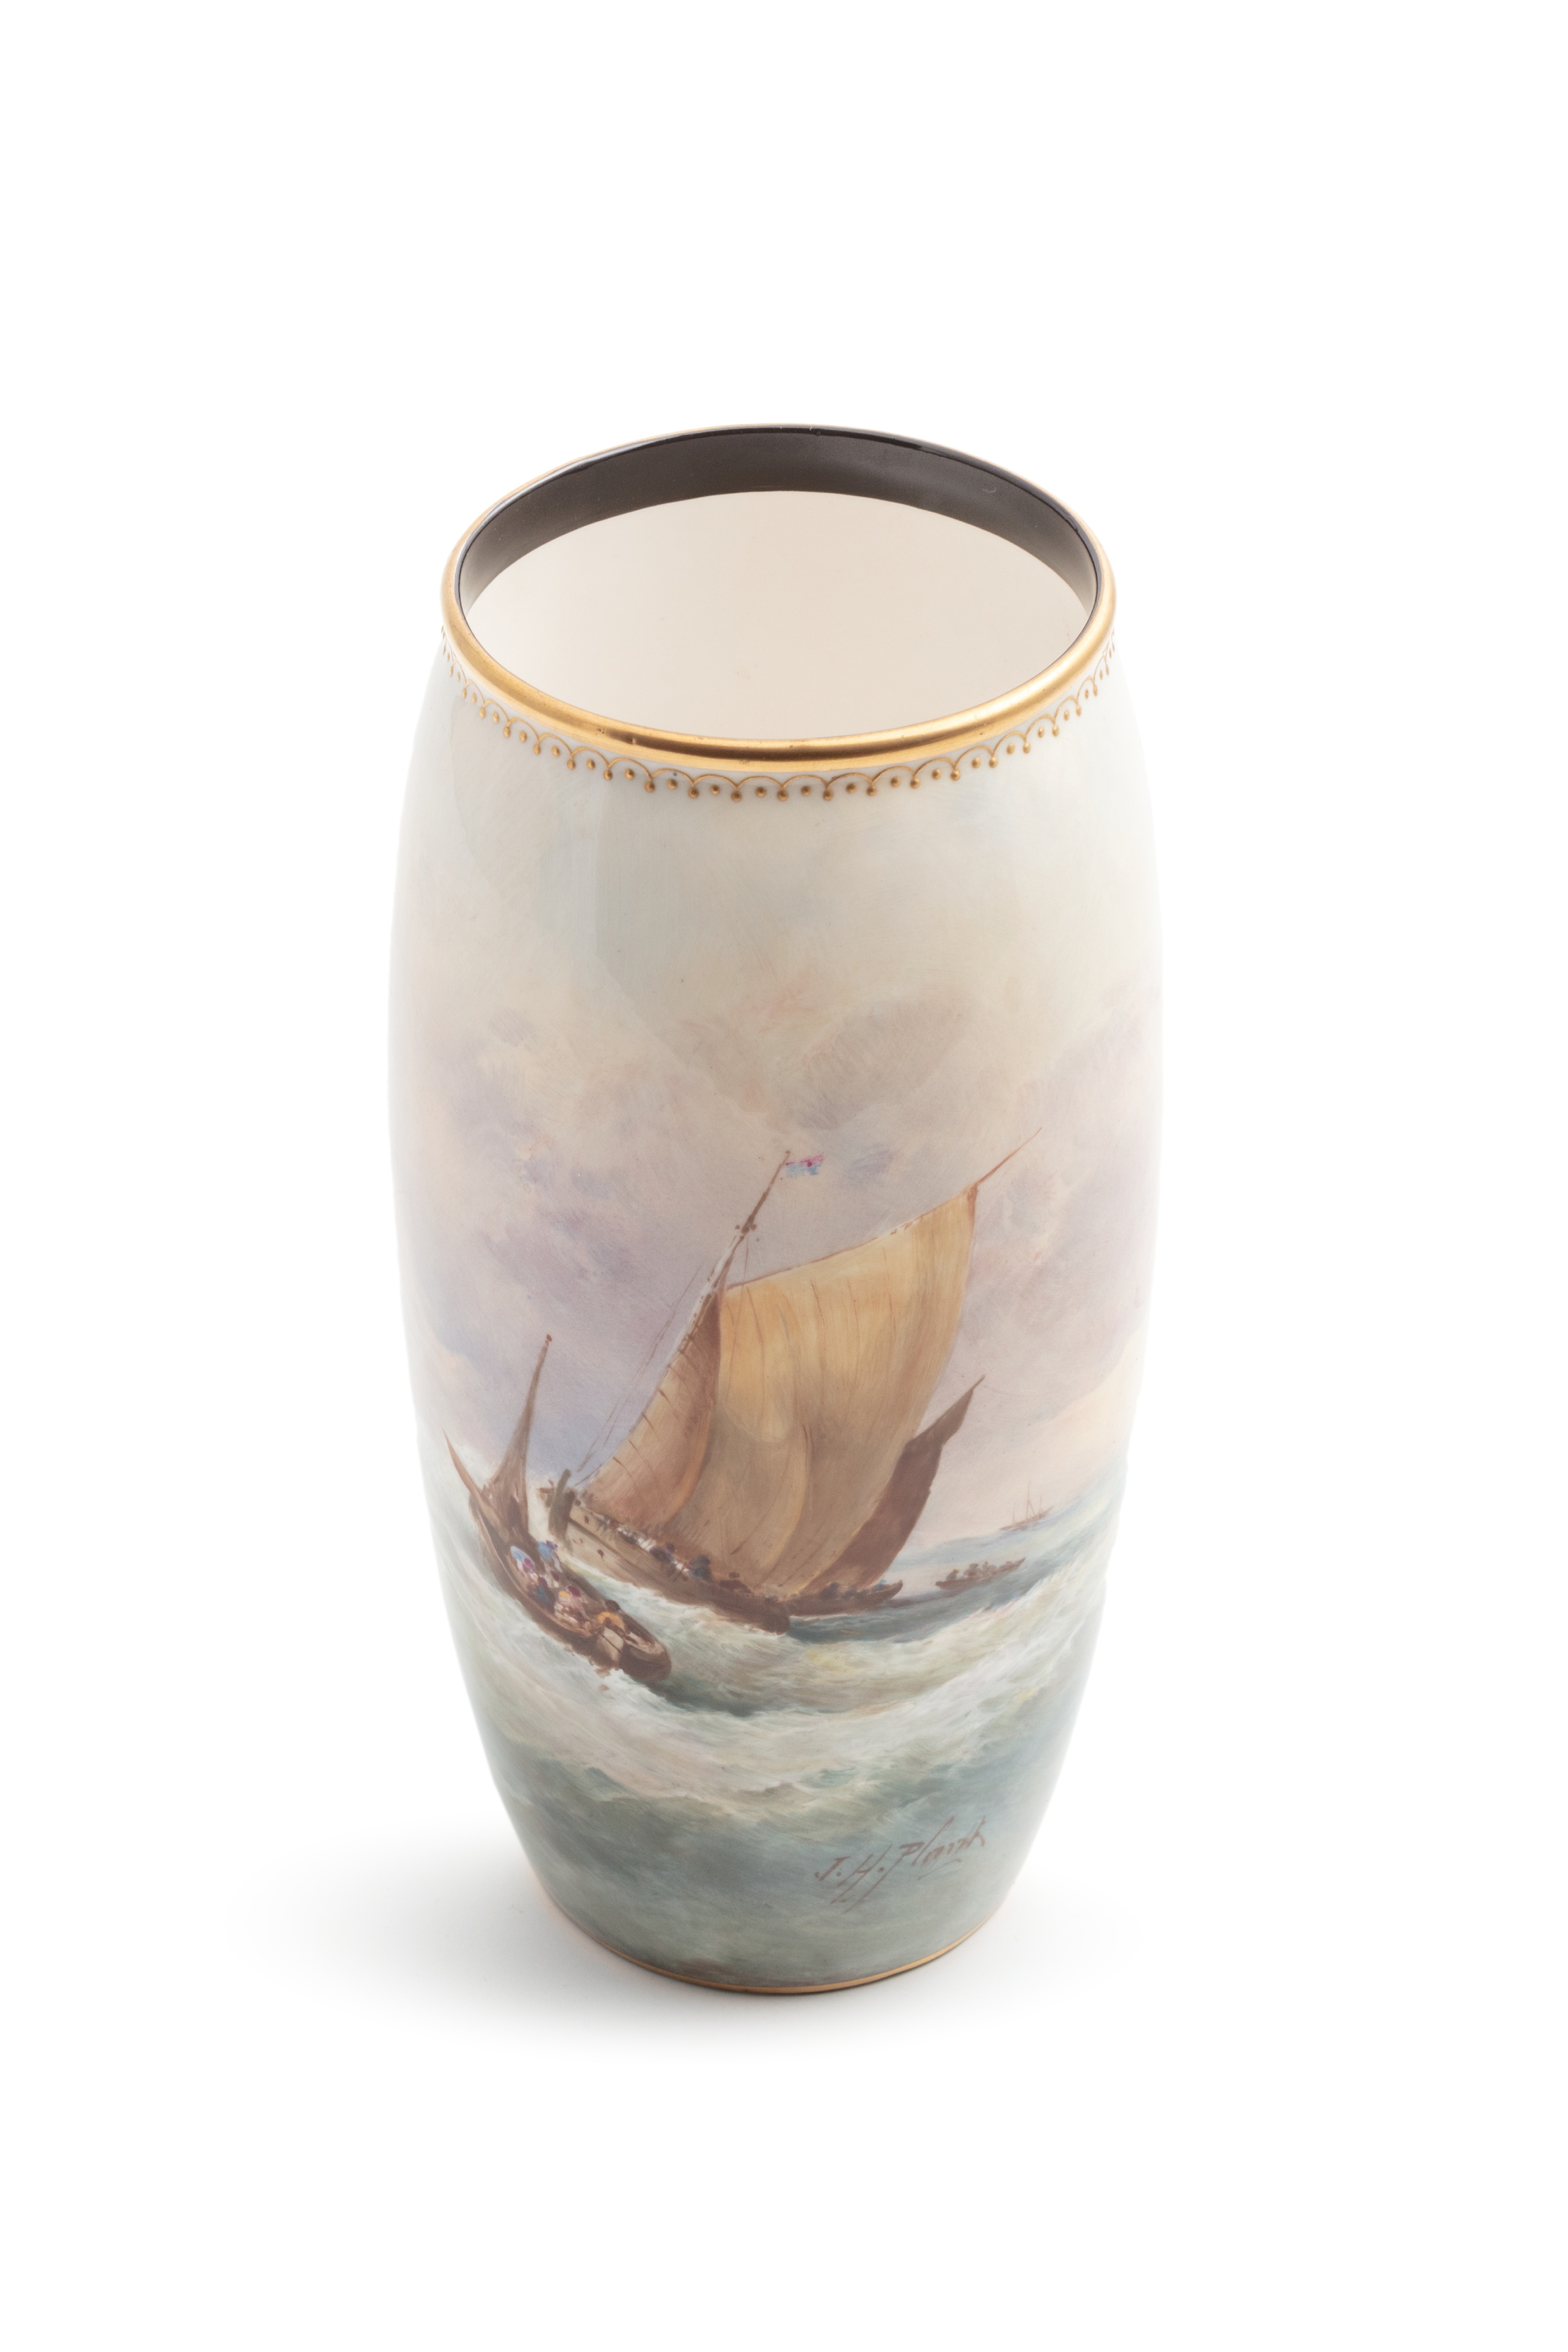 Royal Doulton vase, painted by John Hugh Plant